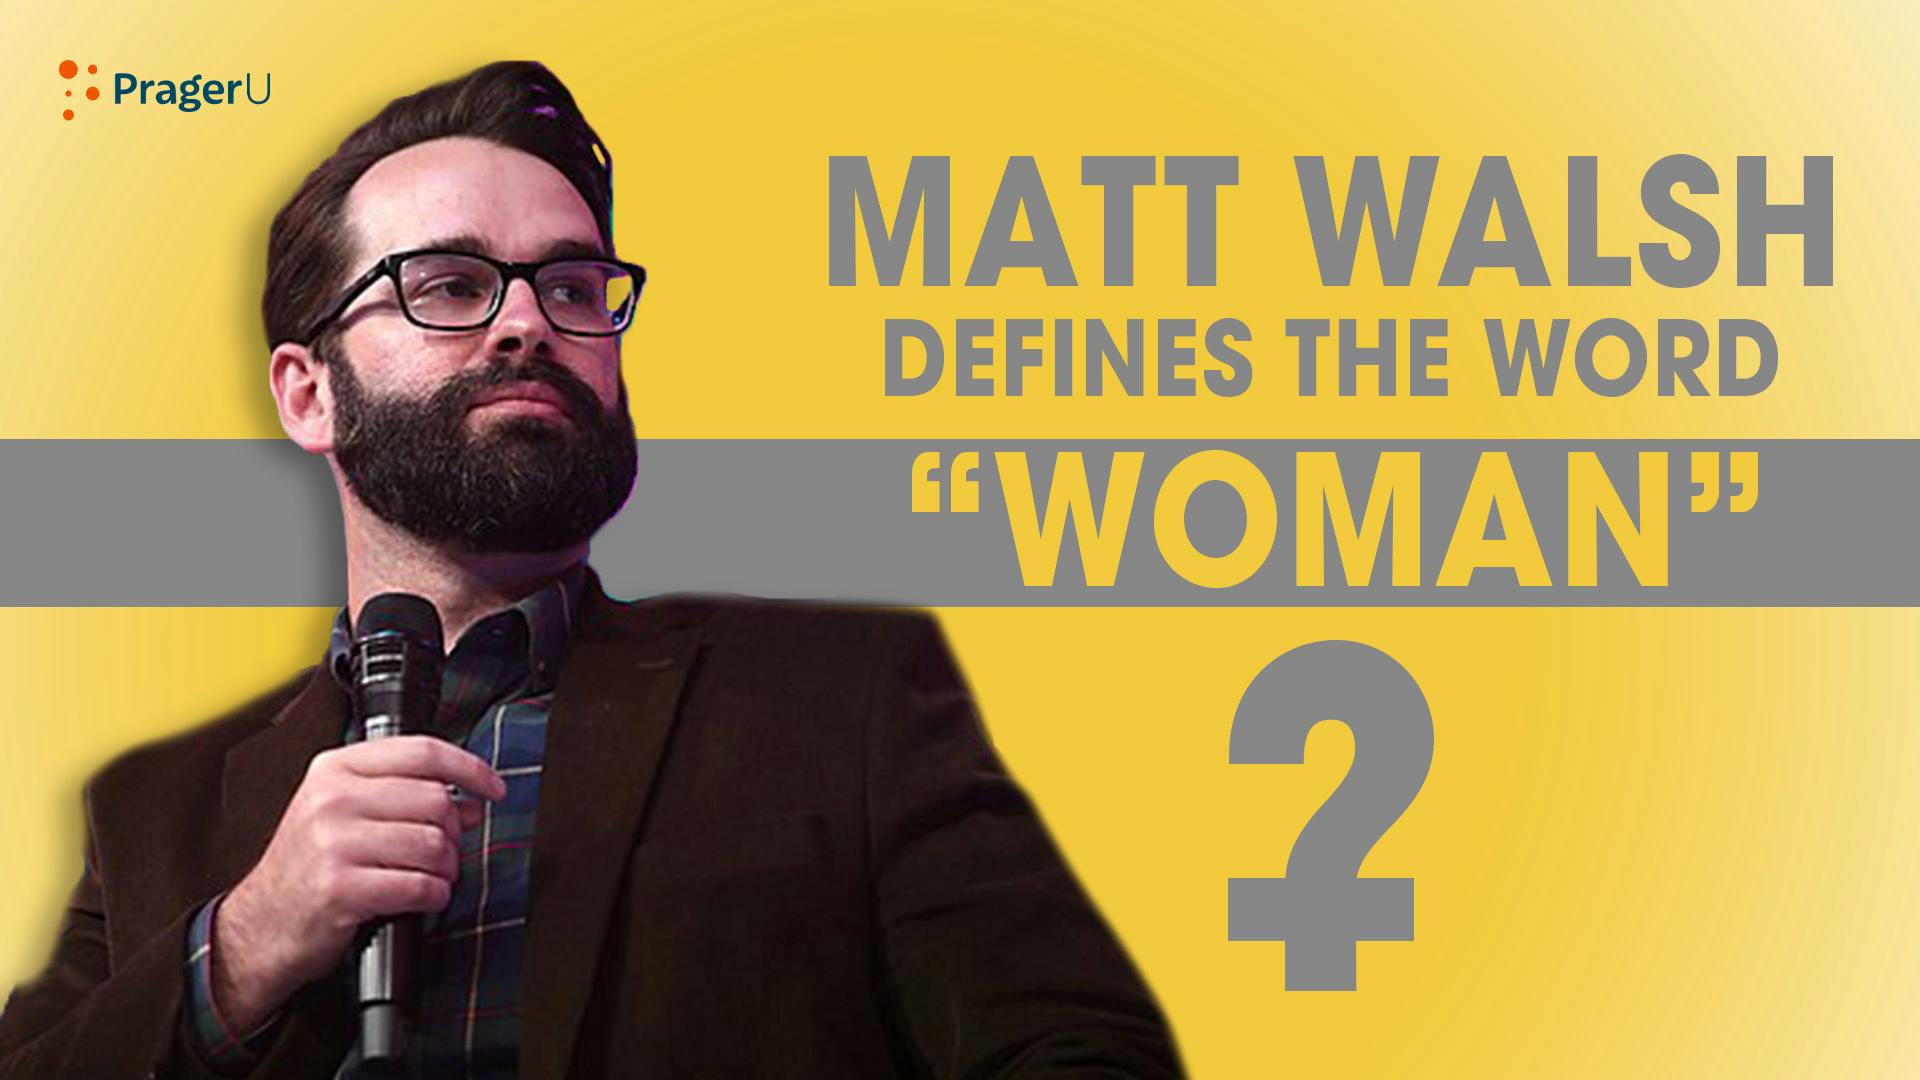 Finally: Matt Walsh Defines the Word “Woman”